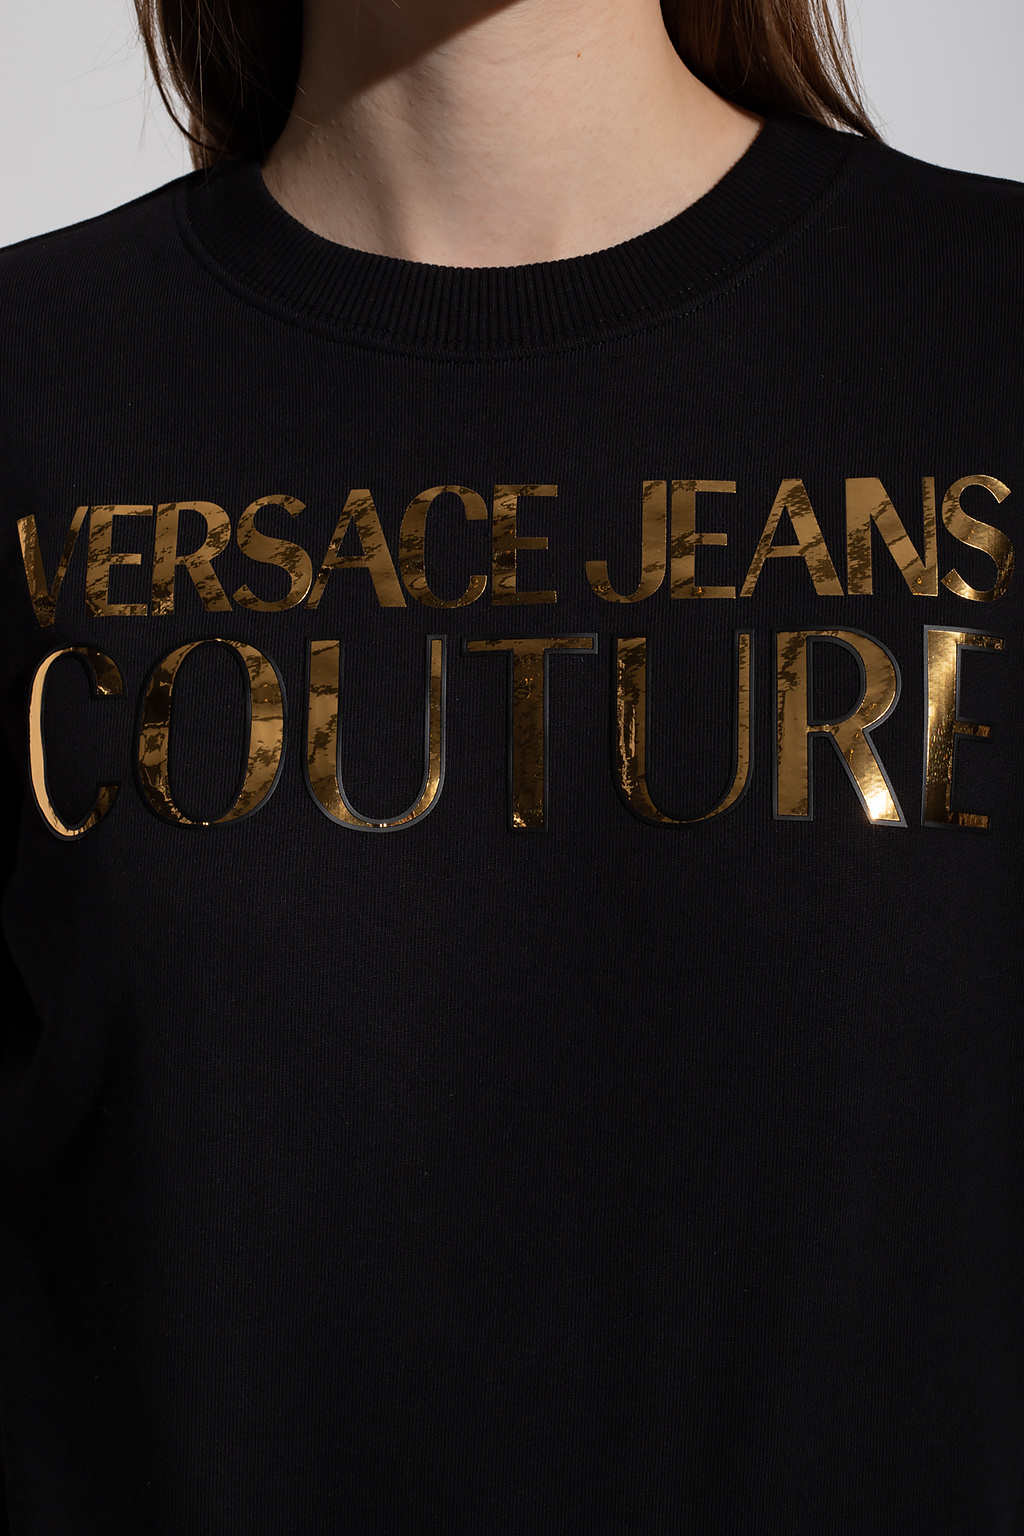 Versace Jeans Couture Womens Art Trip Hoodie x Aries Arise